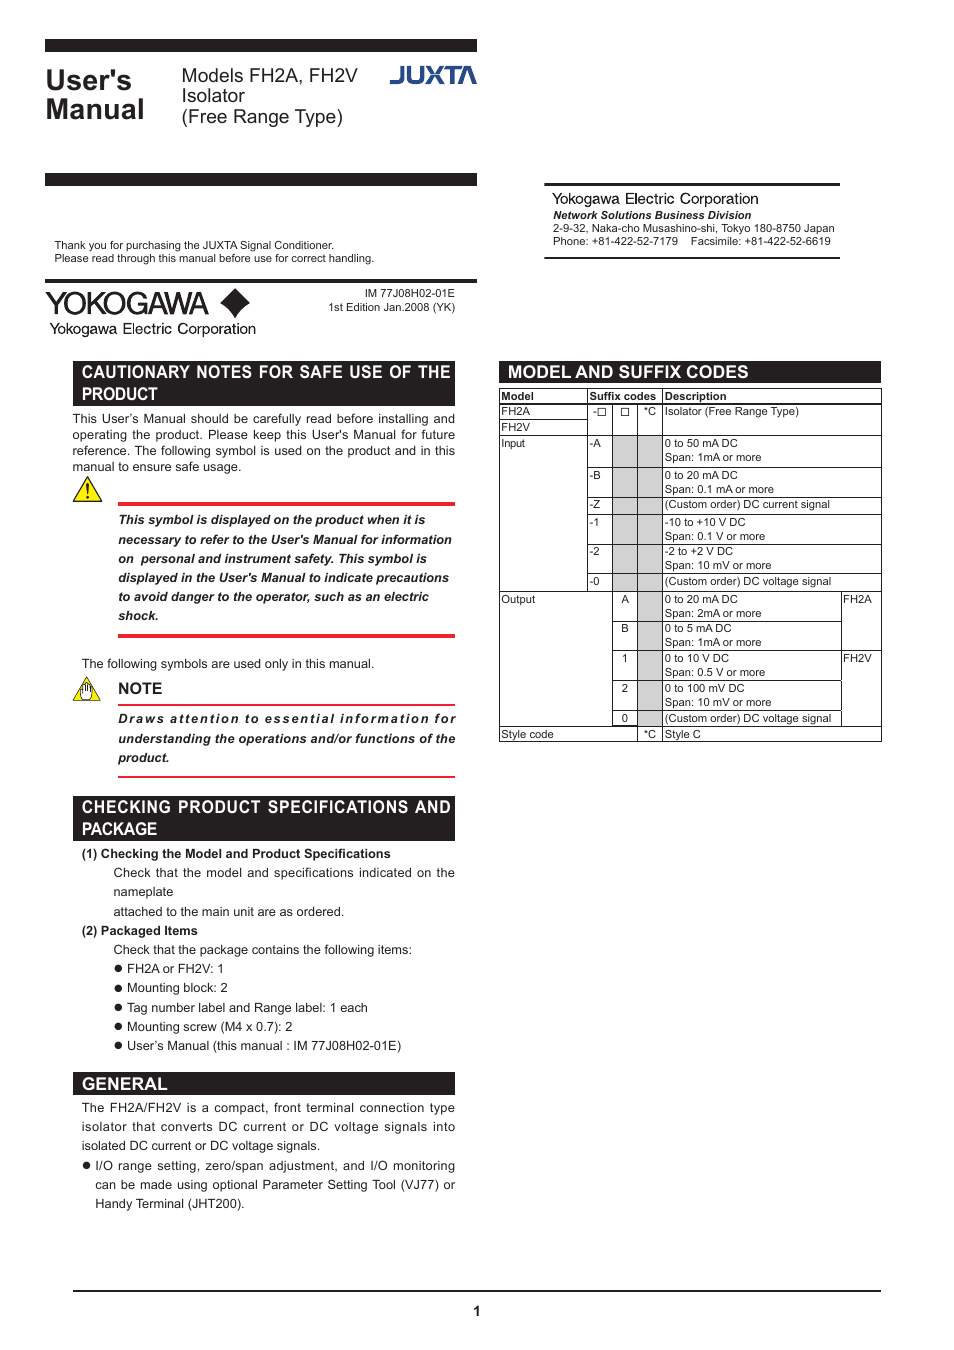 Yokogawa JUXTA FH2V Isolator (Free Range Type) User Manual | 4 pages